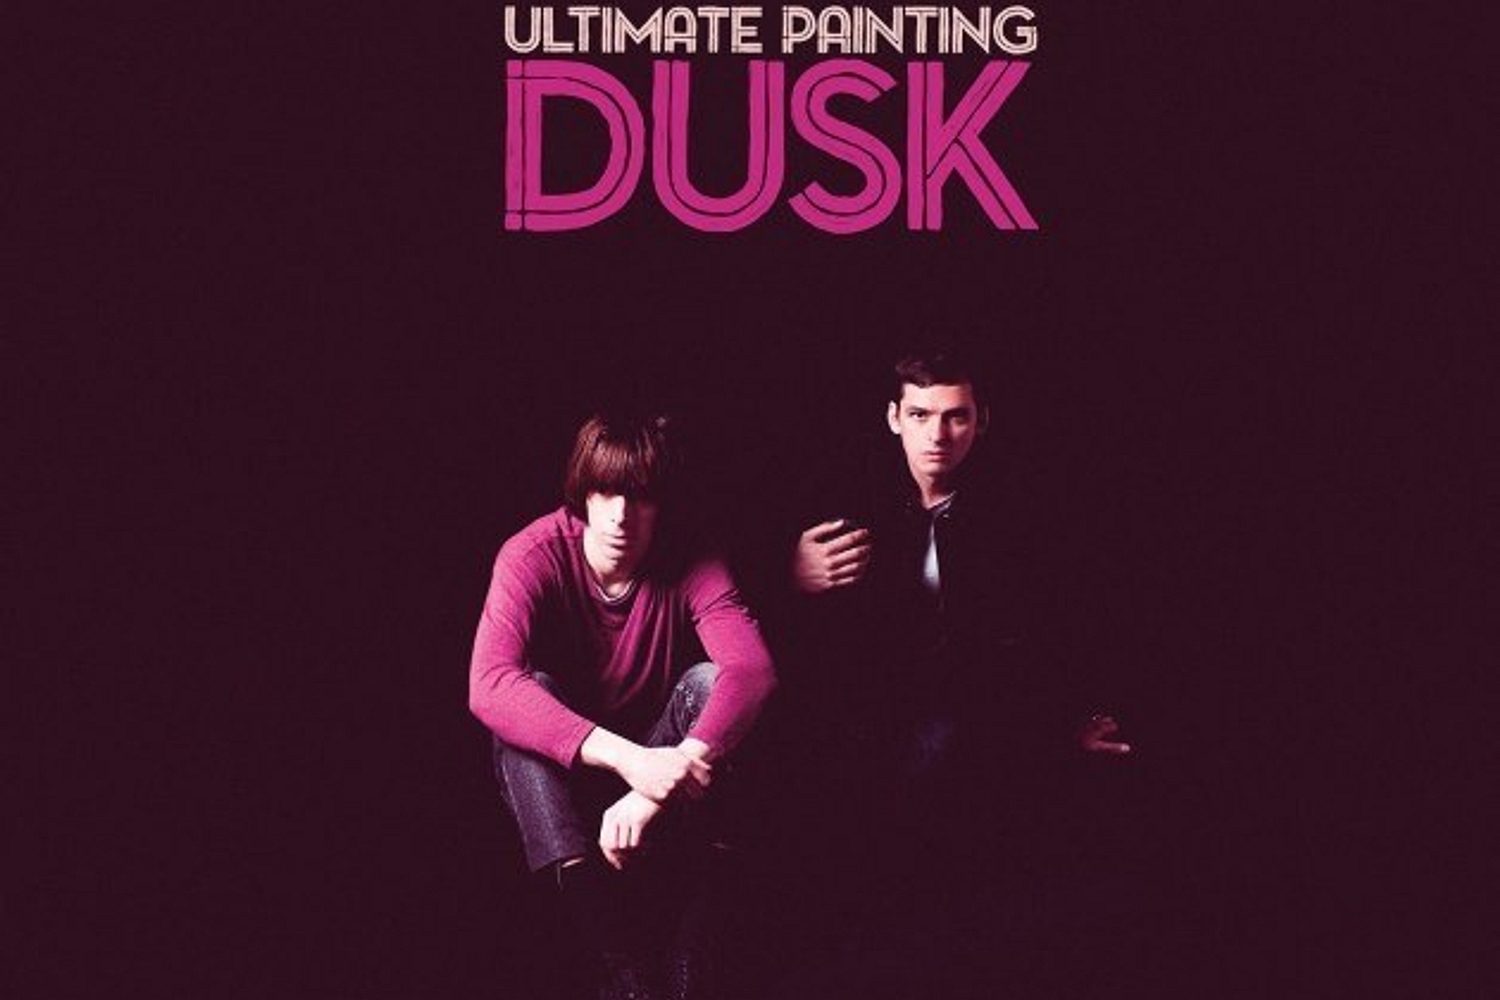 Ultimate Painting - Dusk